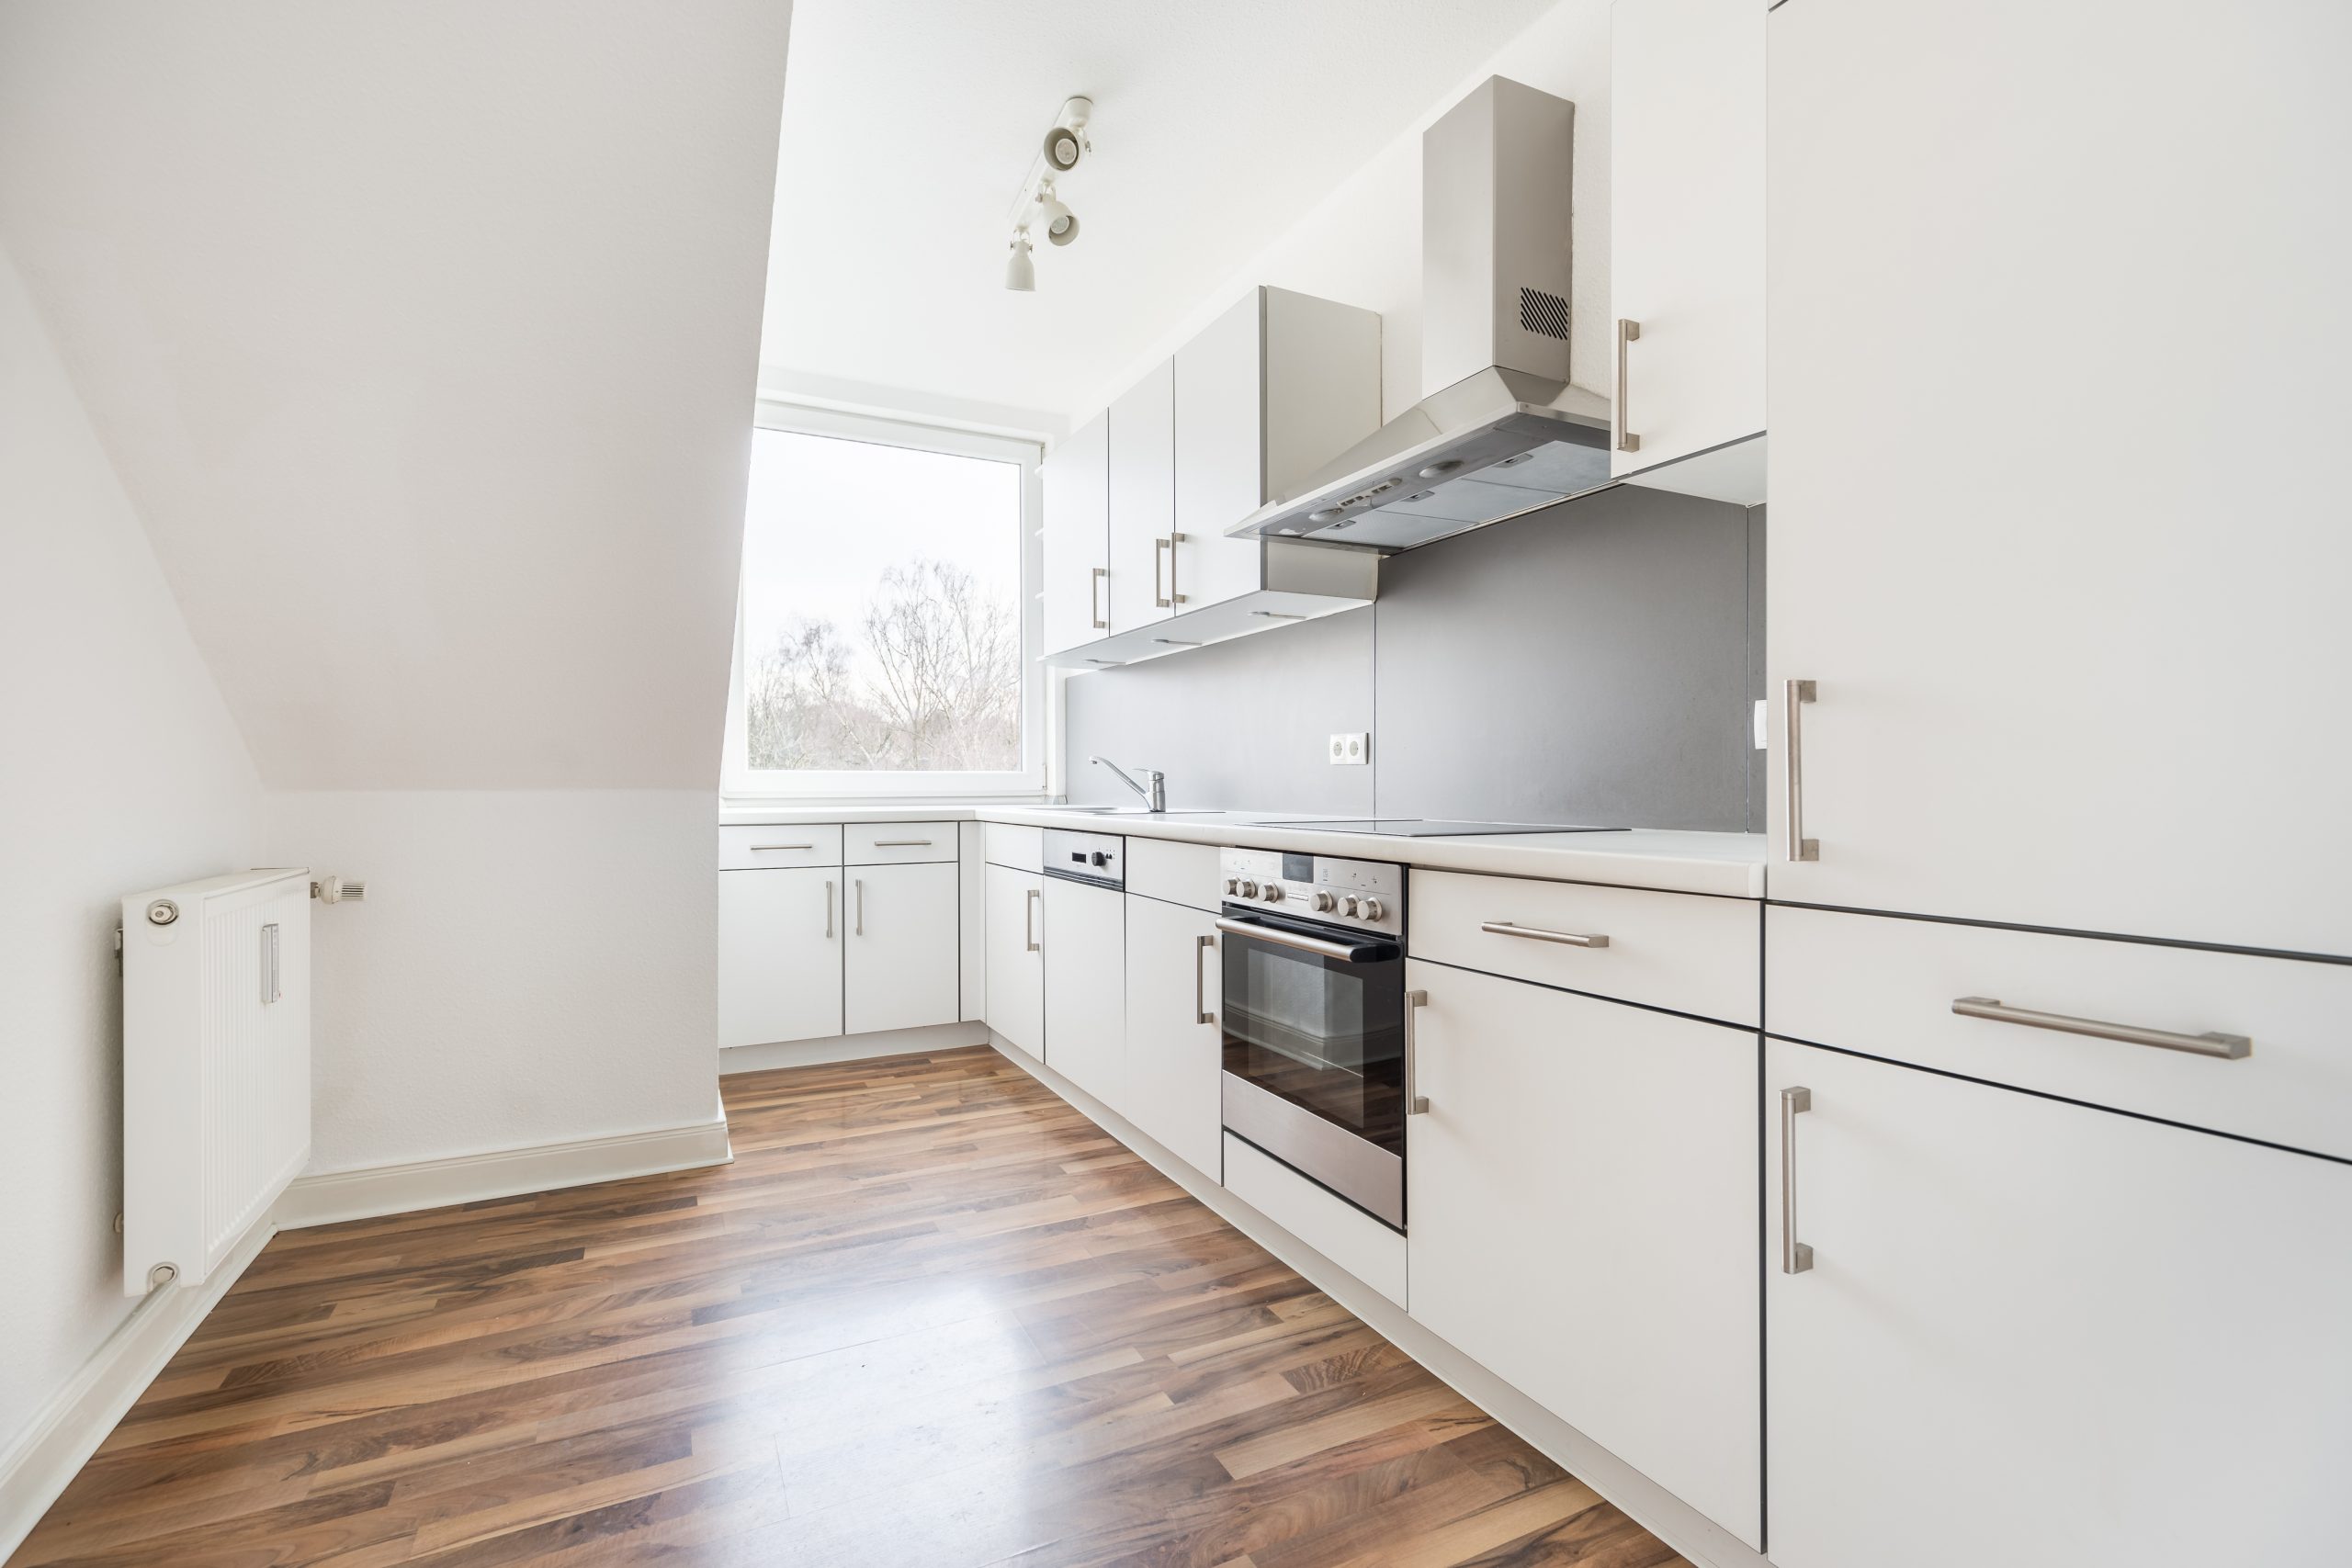 All-white kitchen with hardwood floors